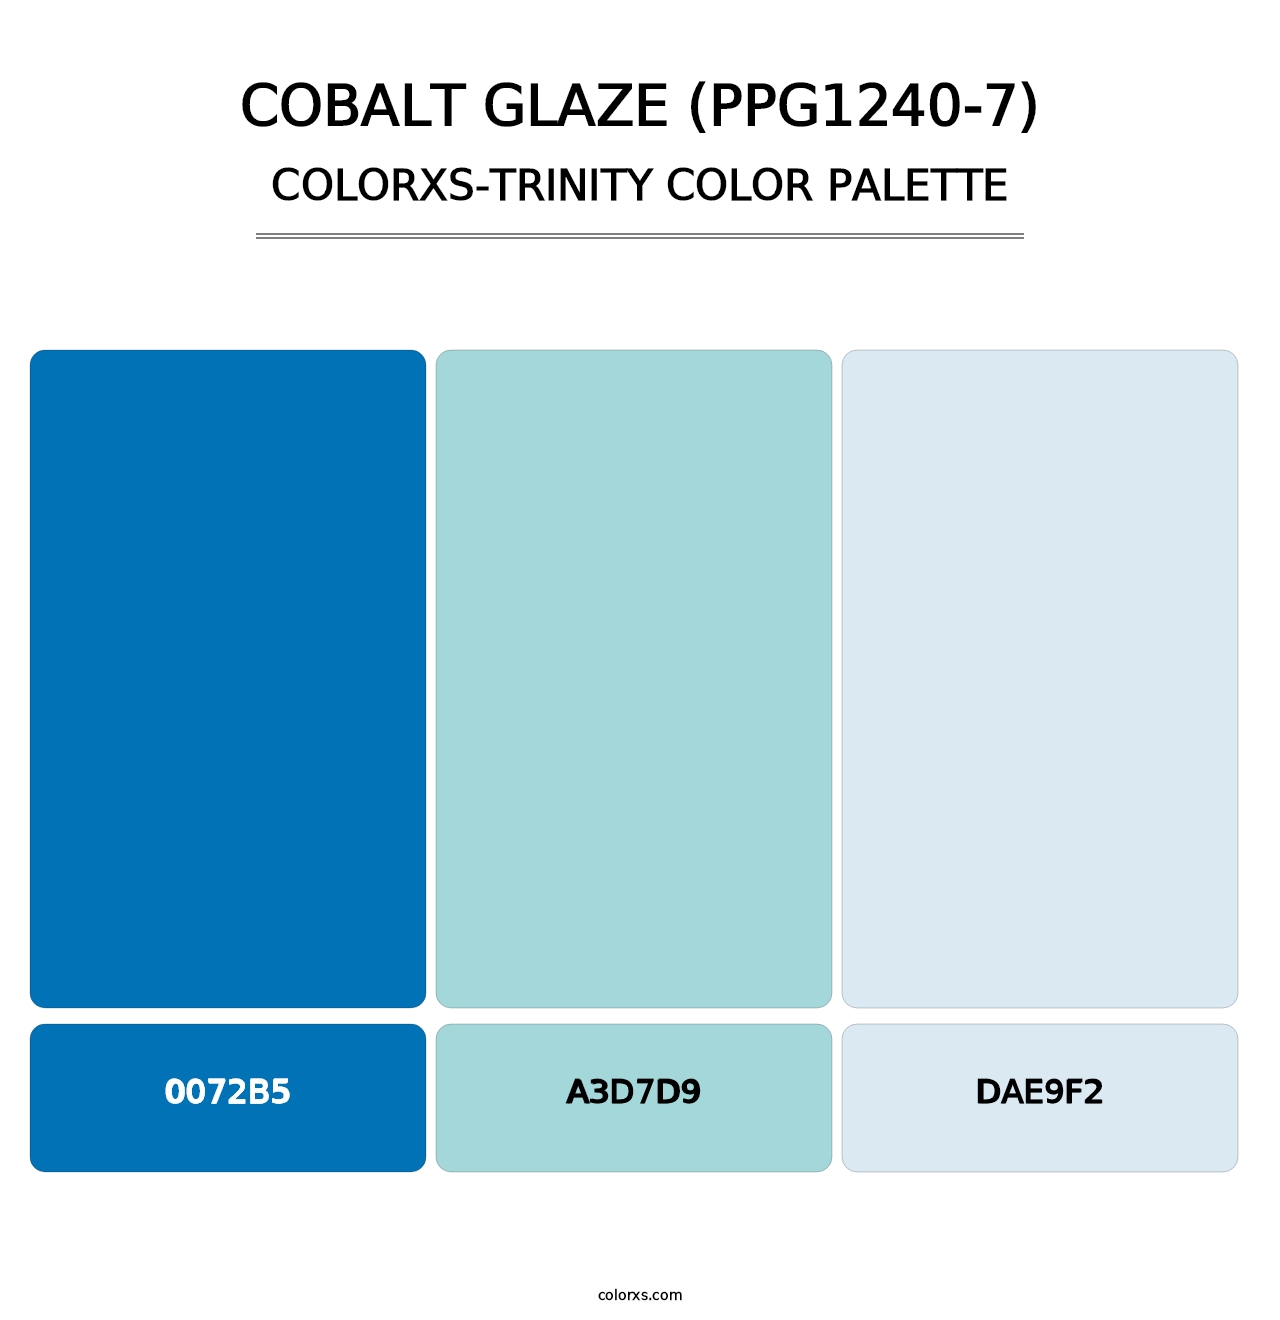 Cobalt Glaze (PPG1240-7) - Colorxs Trinity Palette